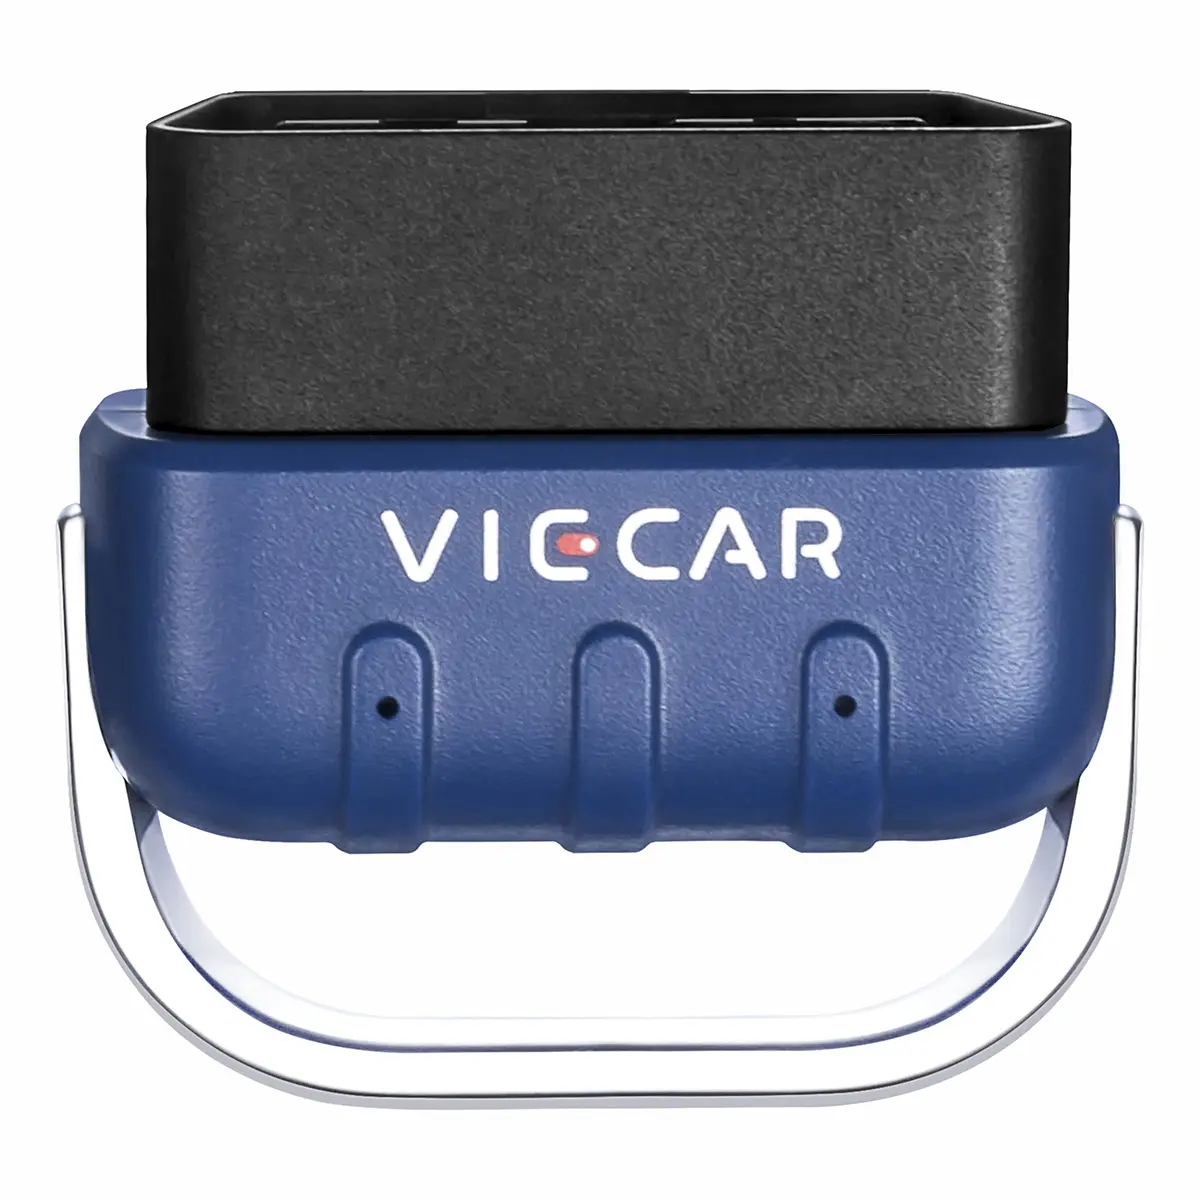 VIECAR-جهاز تشخيص أعطال السيارةvp005 OBDII, جهاز obd2 OBD11 ، يحتوي على قارئ أكواد السيارةobd11 ، يحتوي على خاصية مسح السيارةadnroid ، كما يحتوي على أفضل أدوات التشخيص